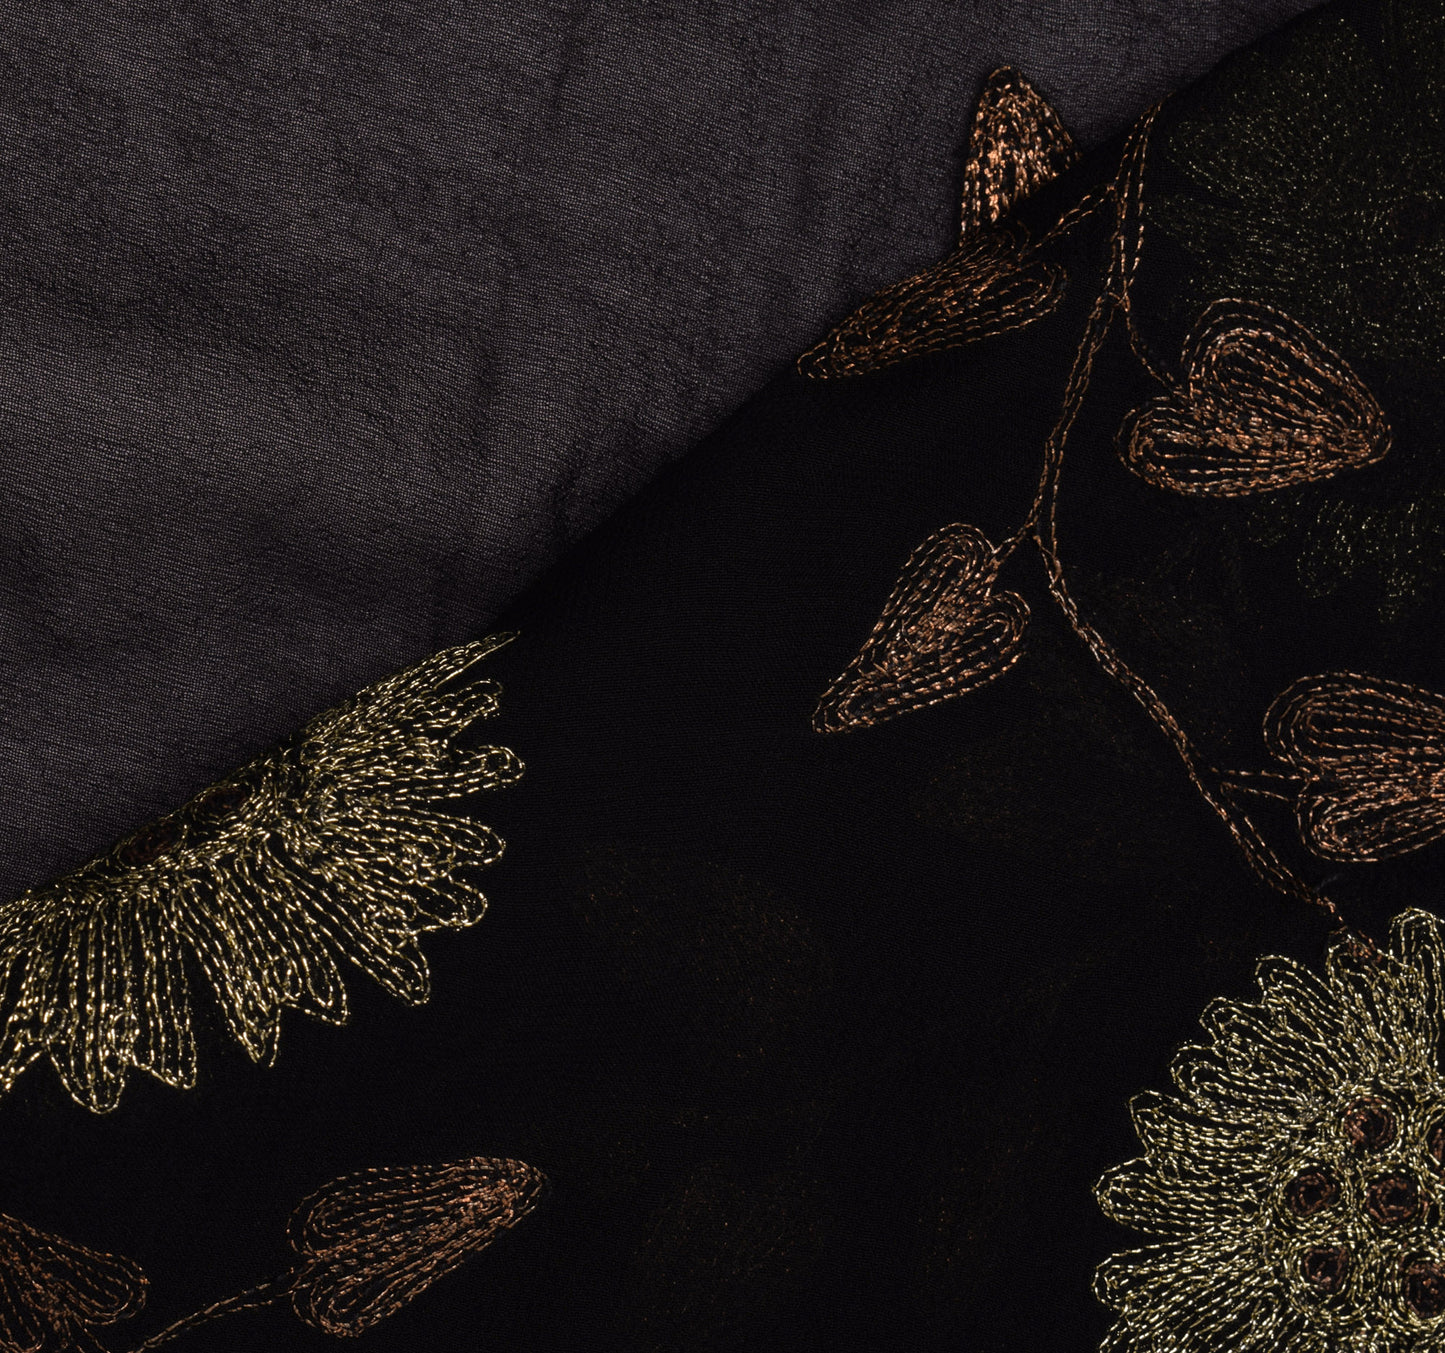 Sushila Vintage Black HEAVY Saree Pure Georgette Silk Embroidered Sari Fabric